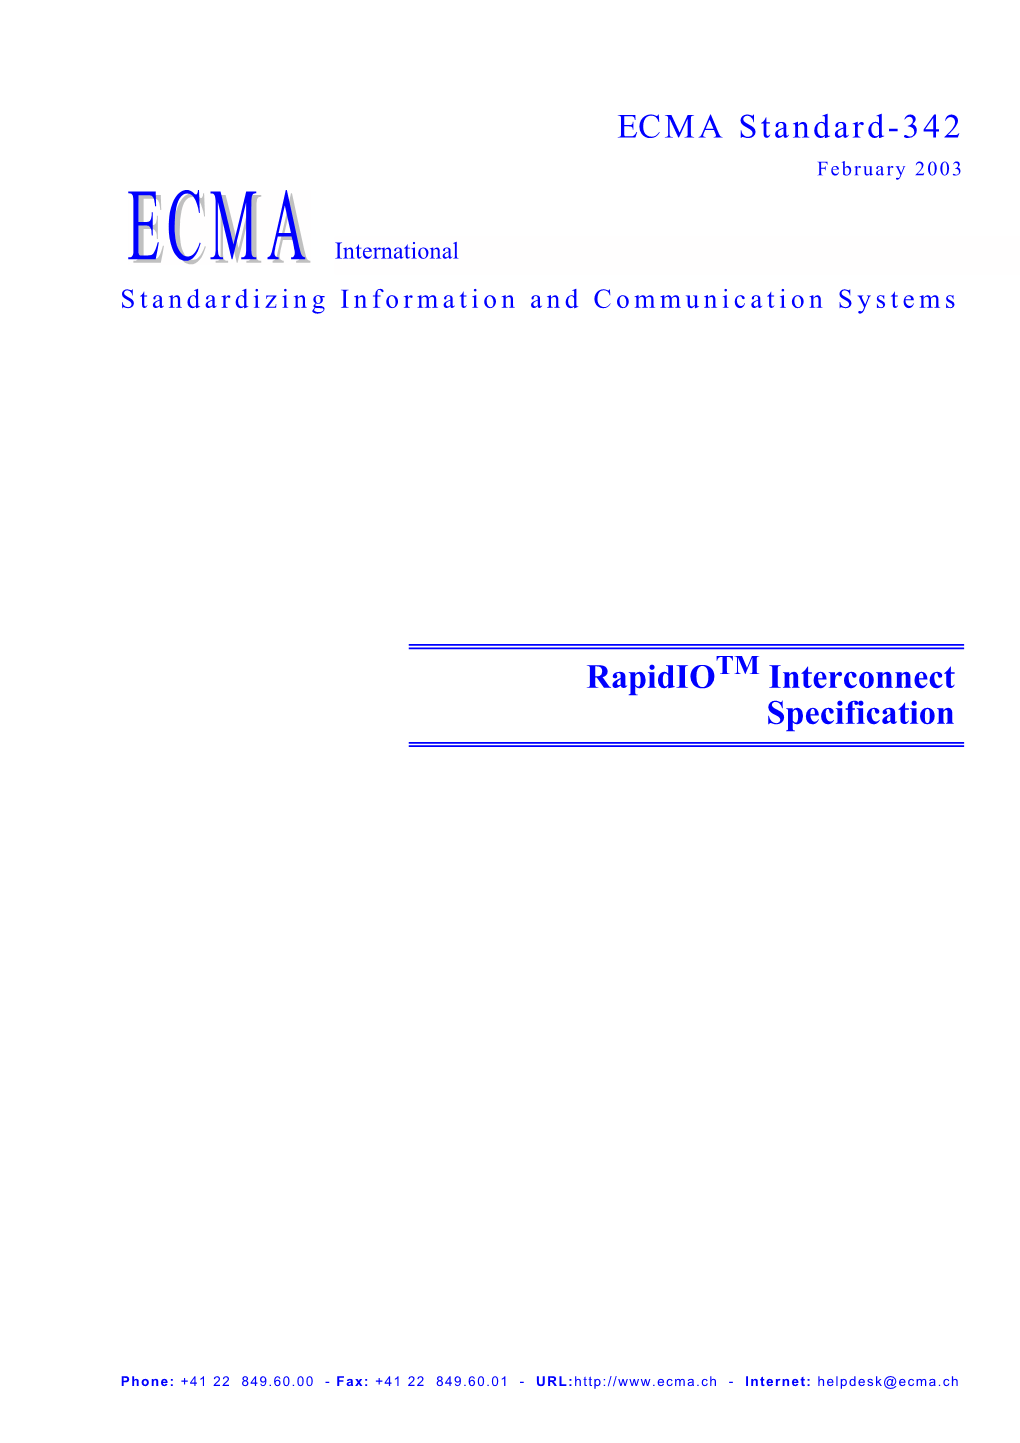 ECMA Standard-342 Rapidio Interconnect Specification